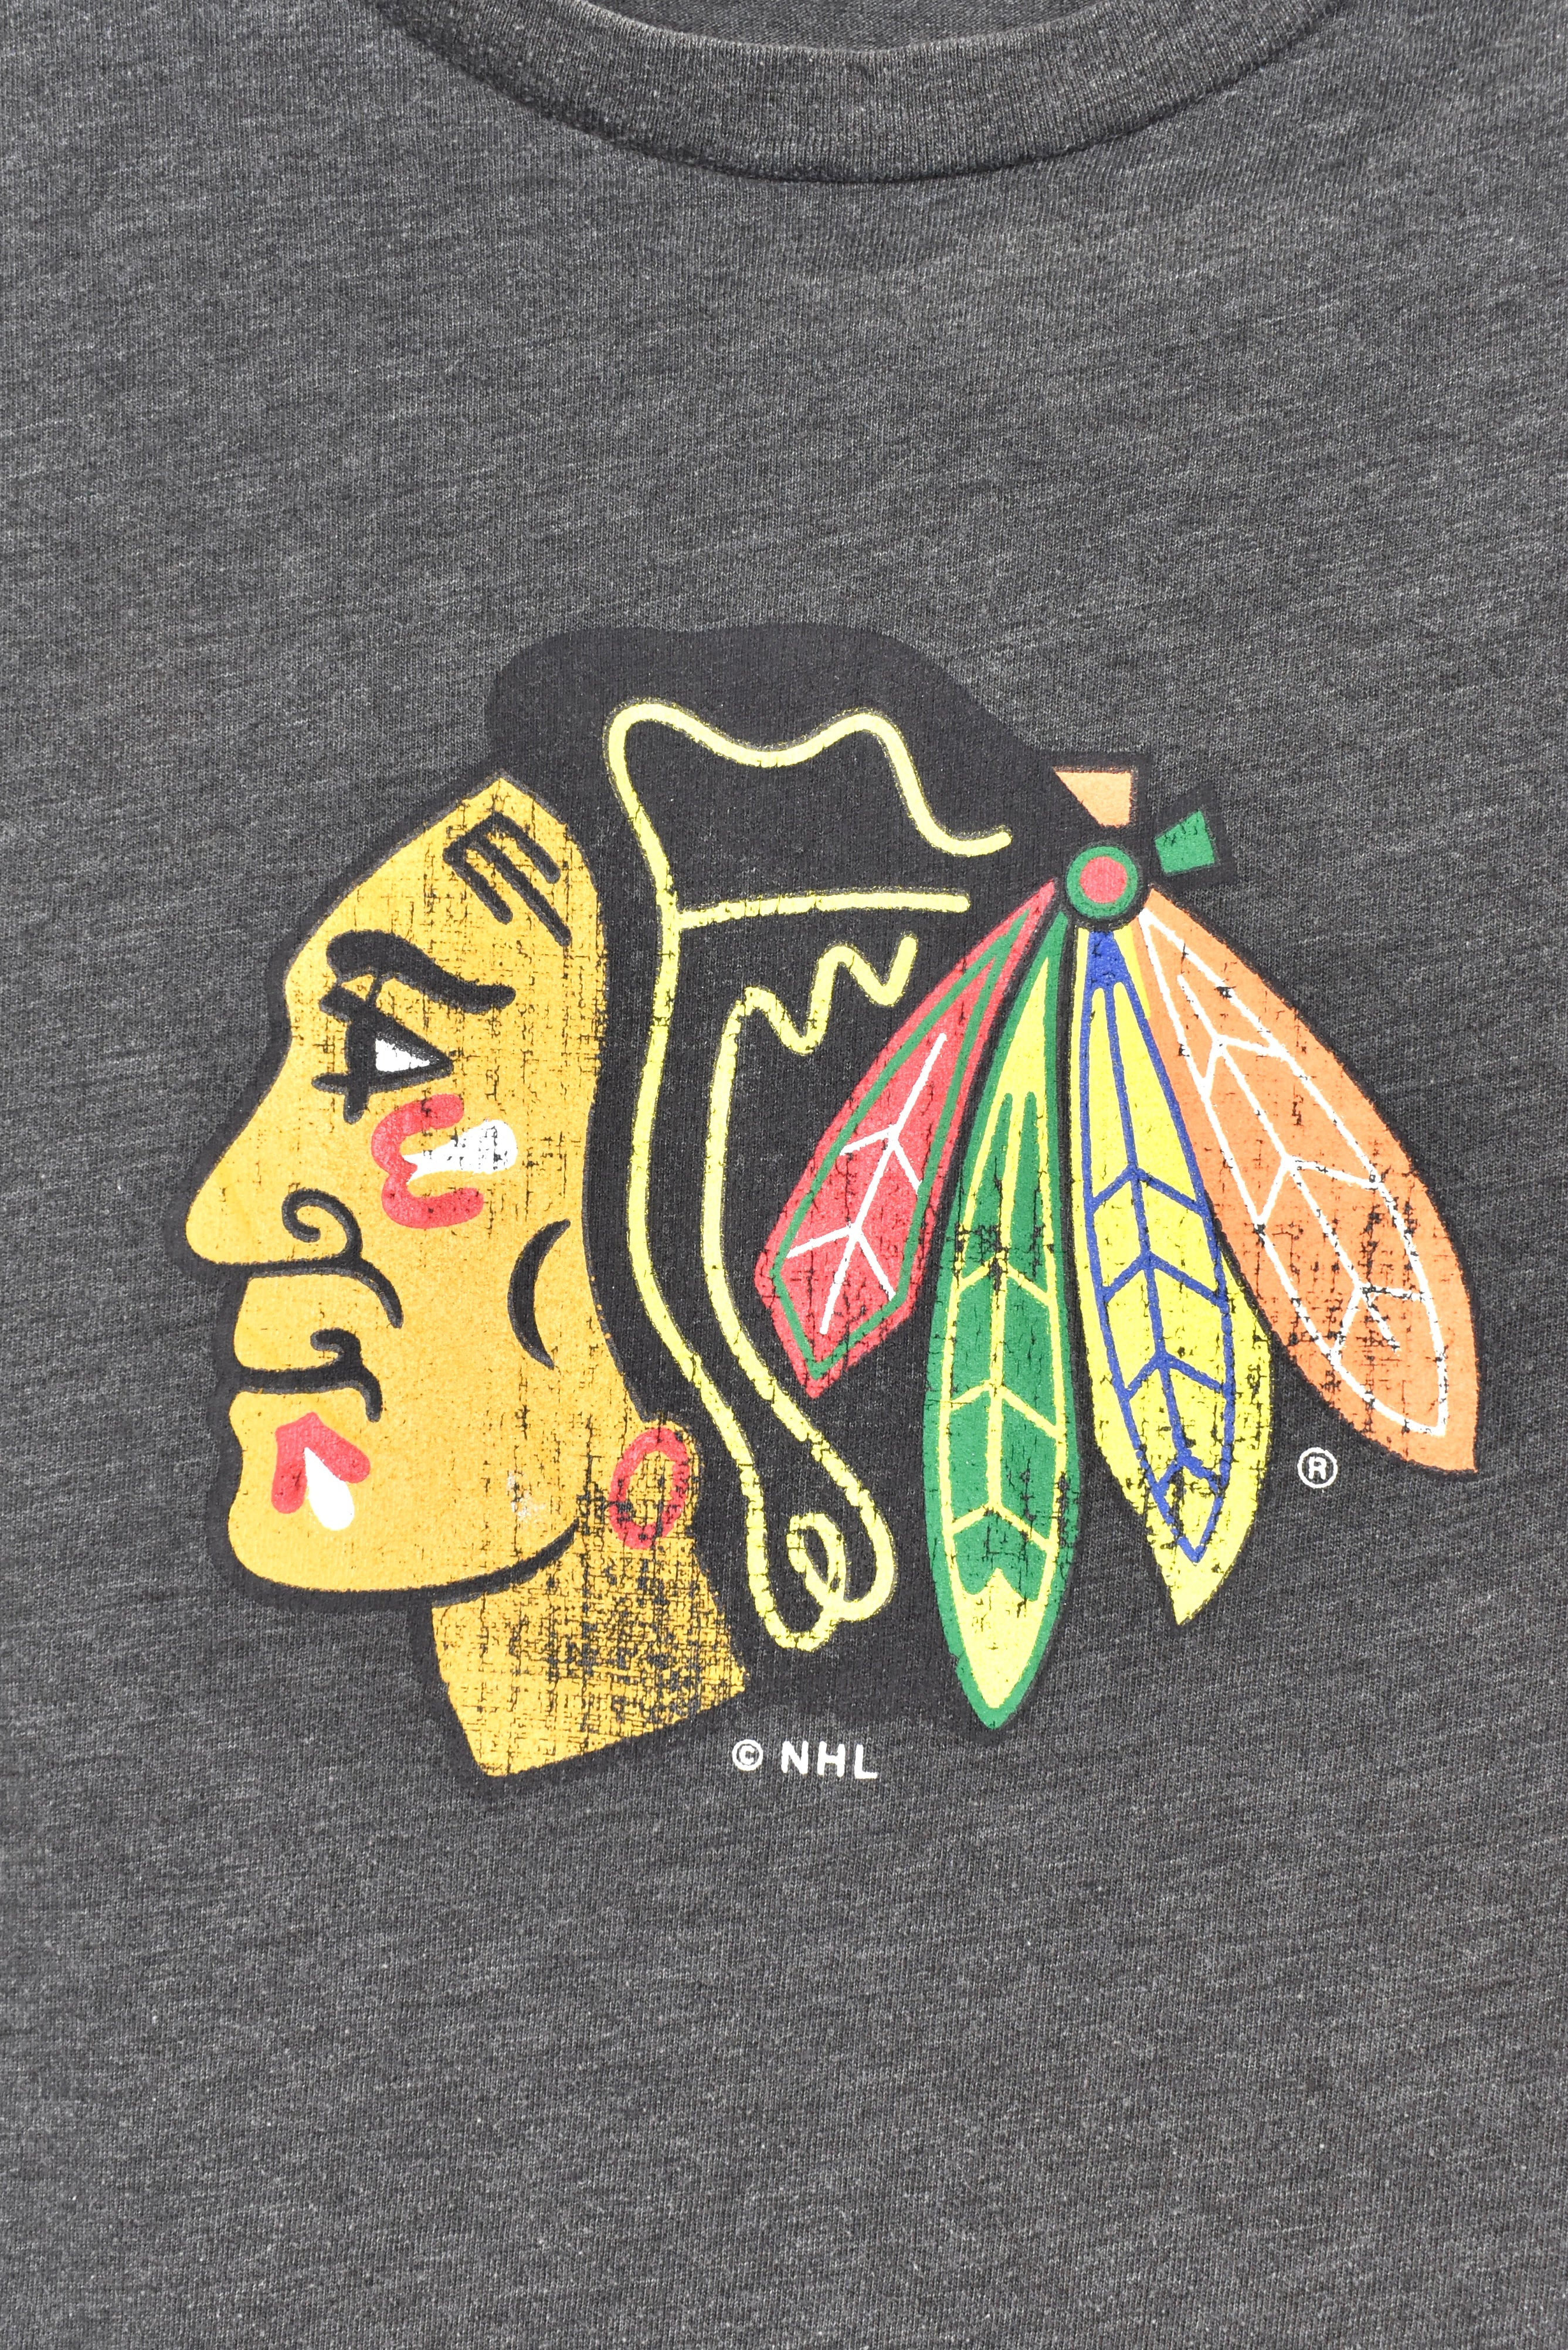 Modern Chicago Blackhawks shirt, NHL grey graphic tee - AU Large PRO SPORT